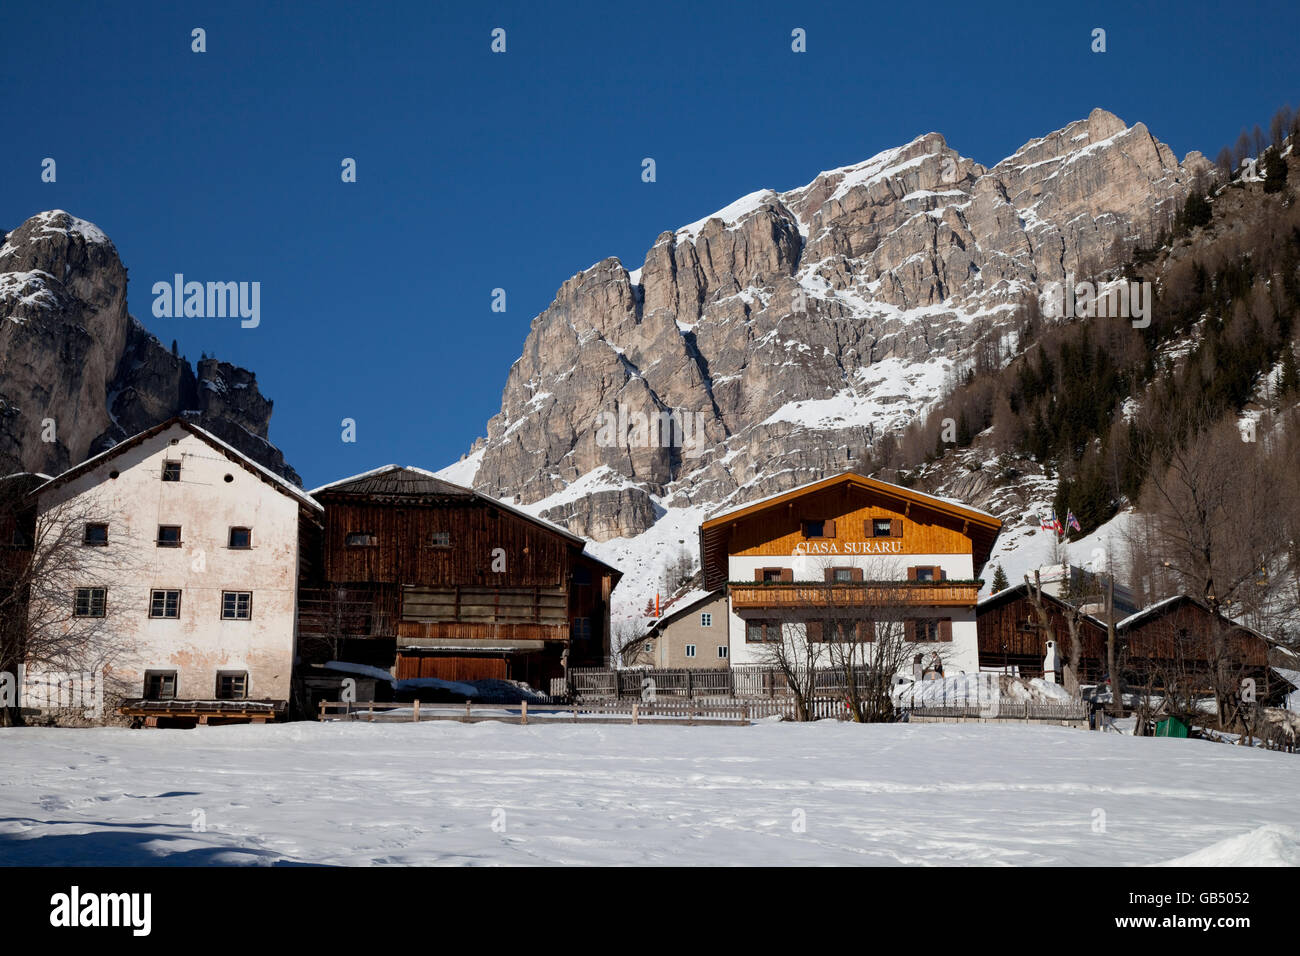 Houses in front of the Sella massif, Kolfuschg, Colfosco, Val Badia, Alta Badia, Dolomites, South Tyrol, Italy, Europe Stock Photo